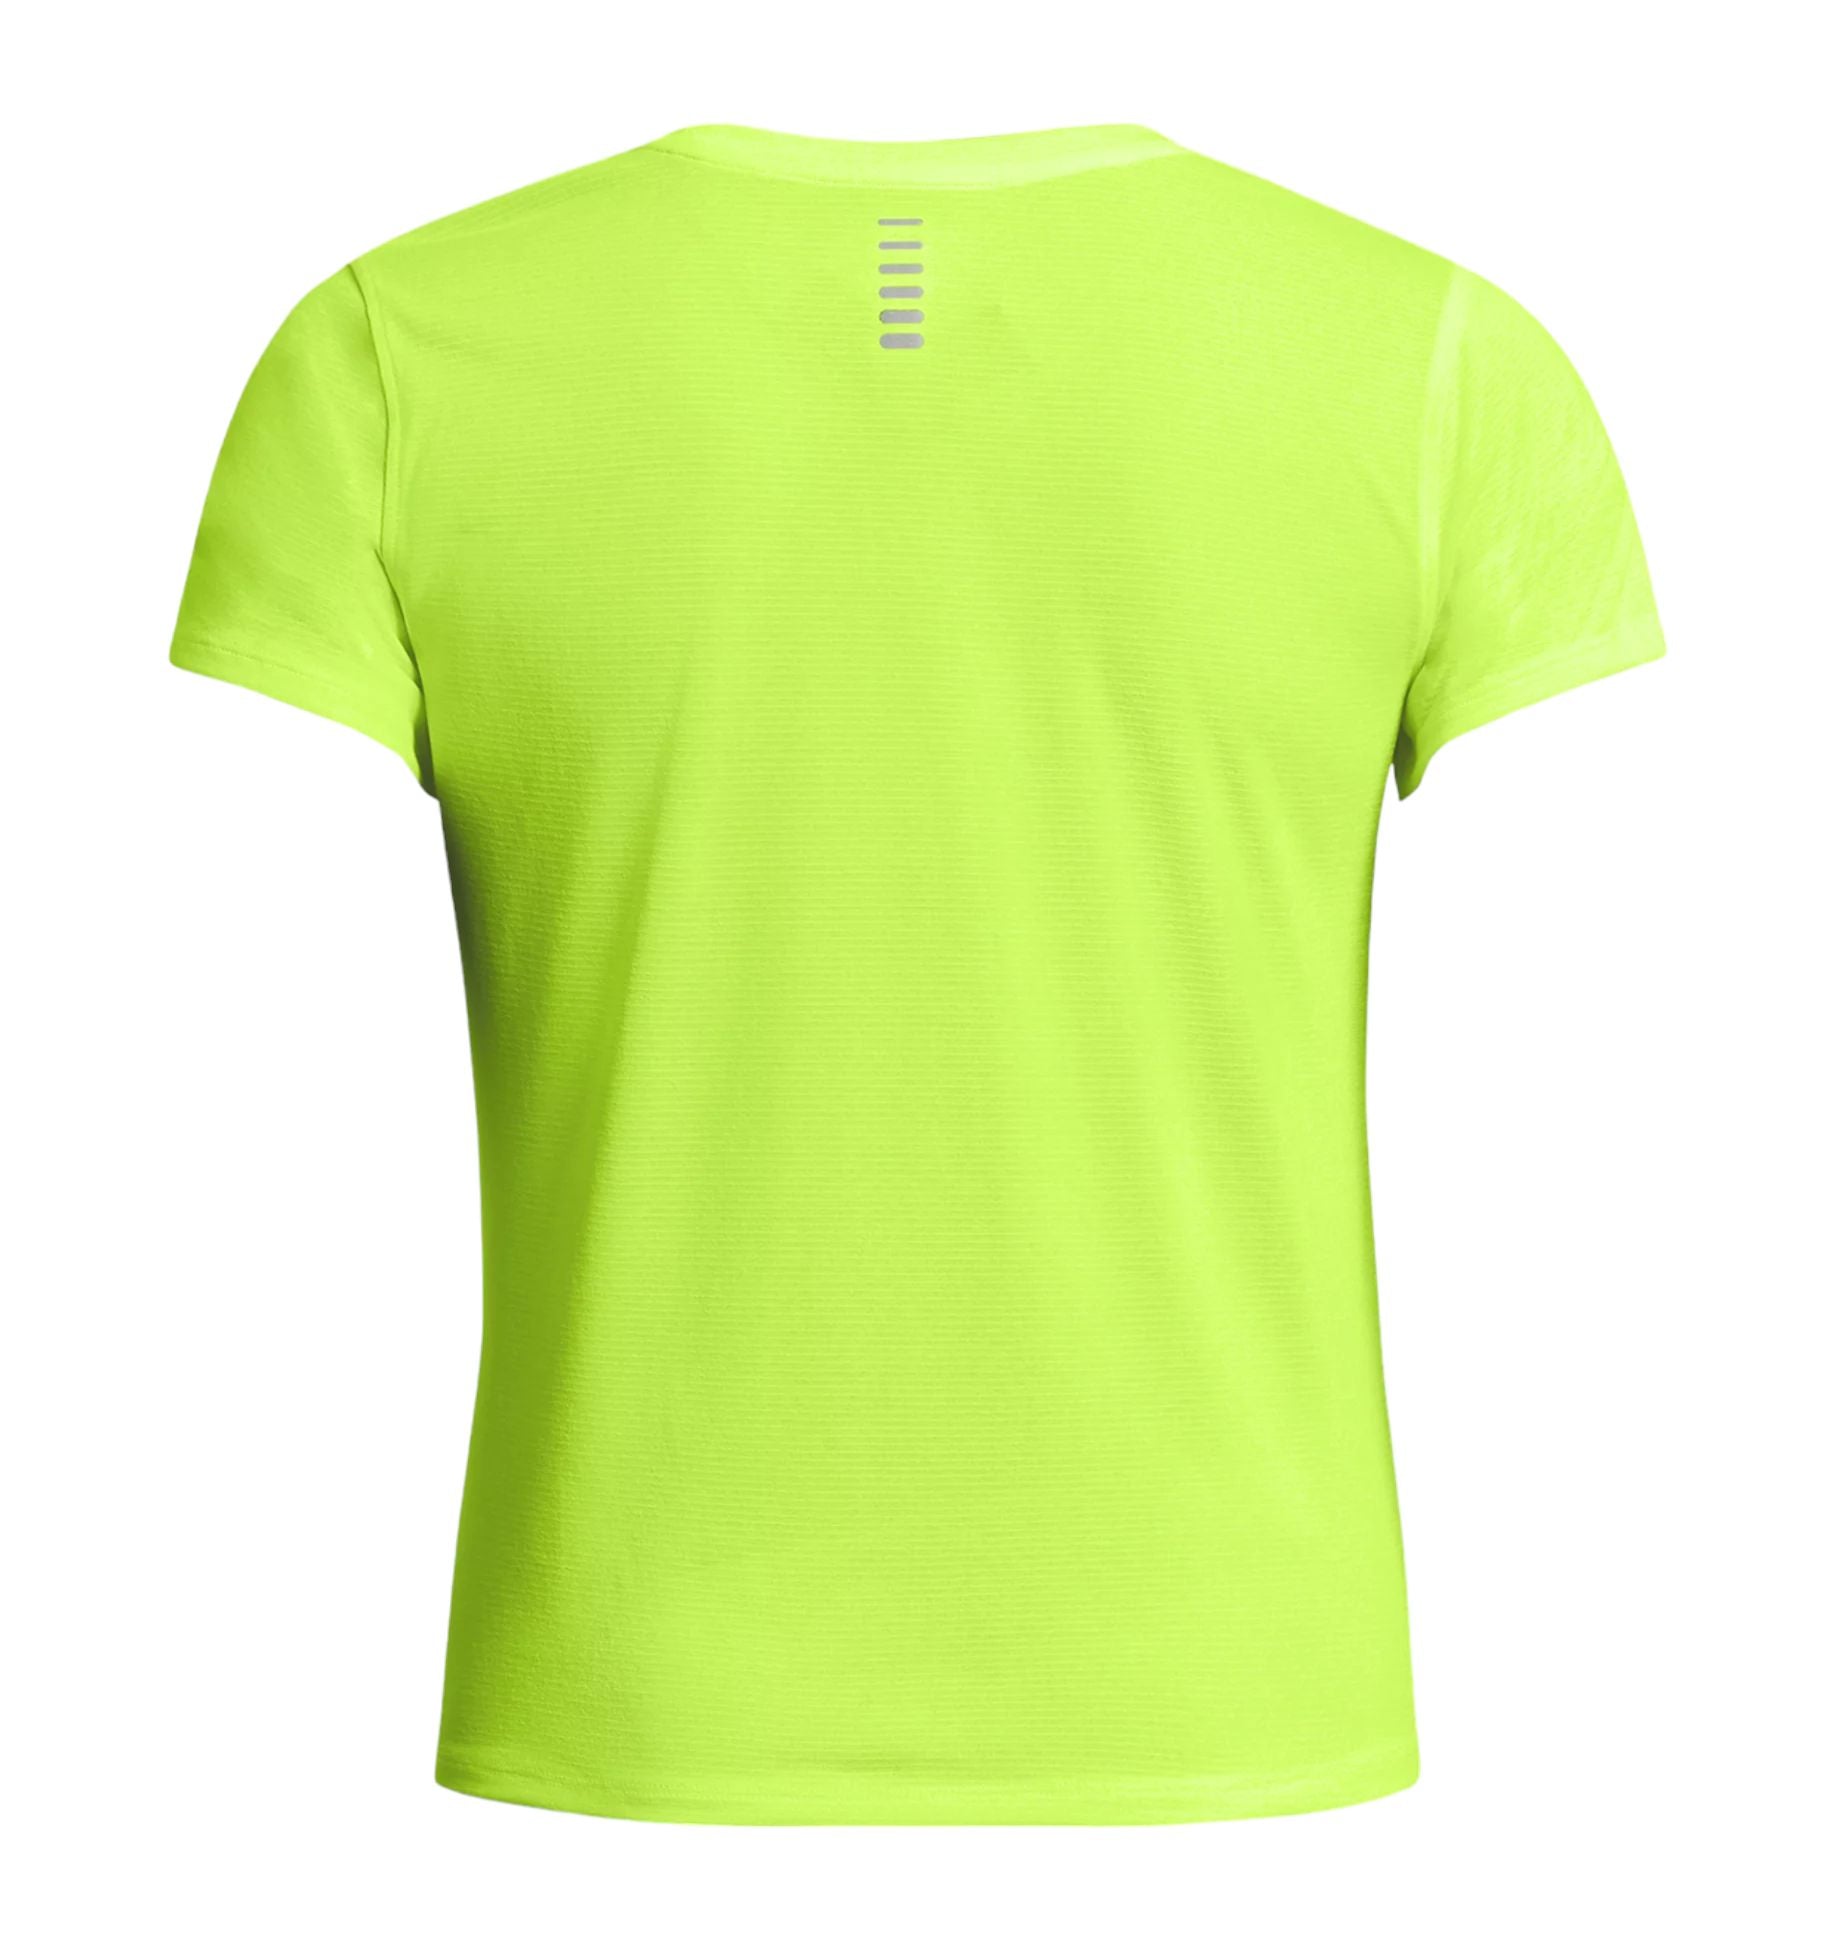 Women's Launch T-shirt High Vis Yellow/Reflective 